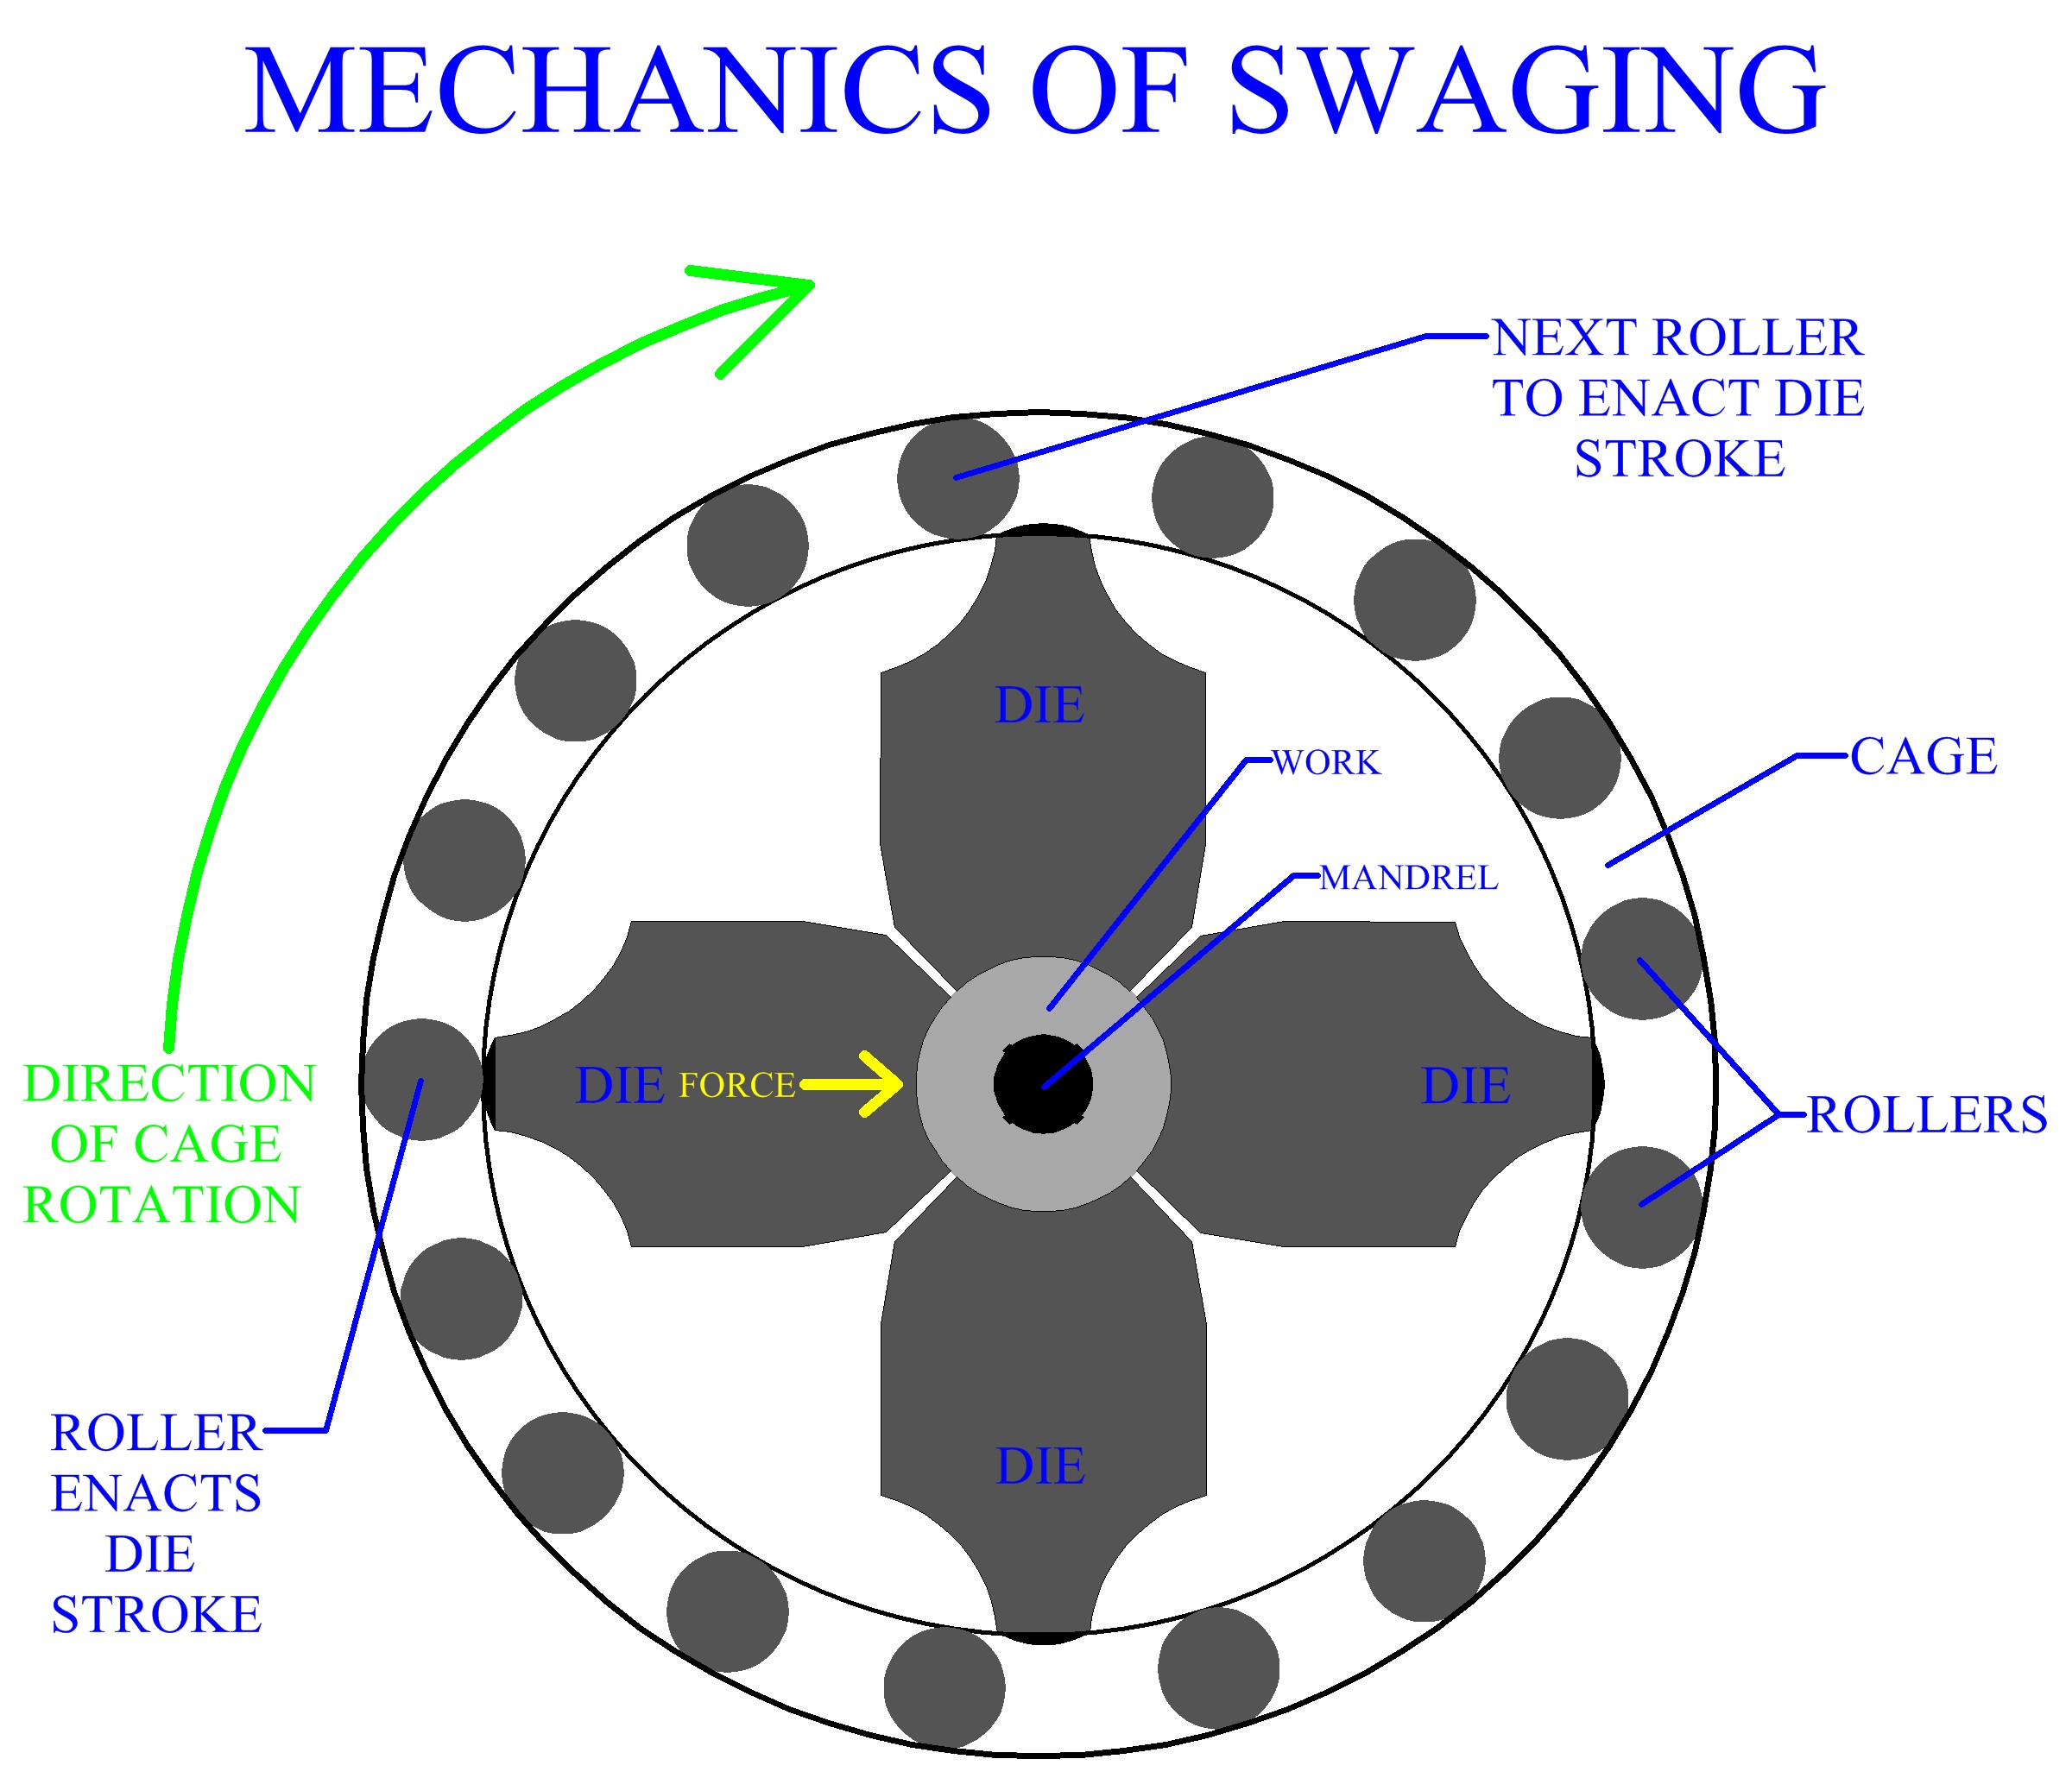 Mechanic of Swaging